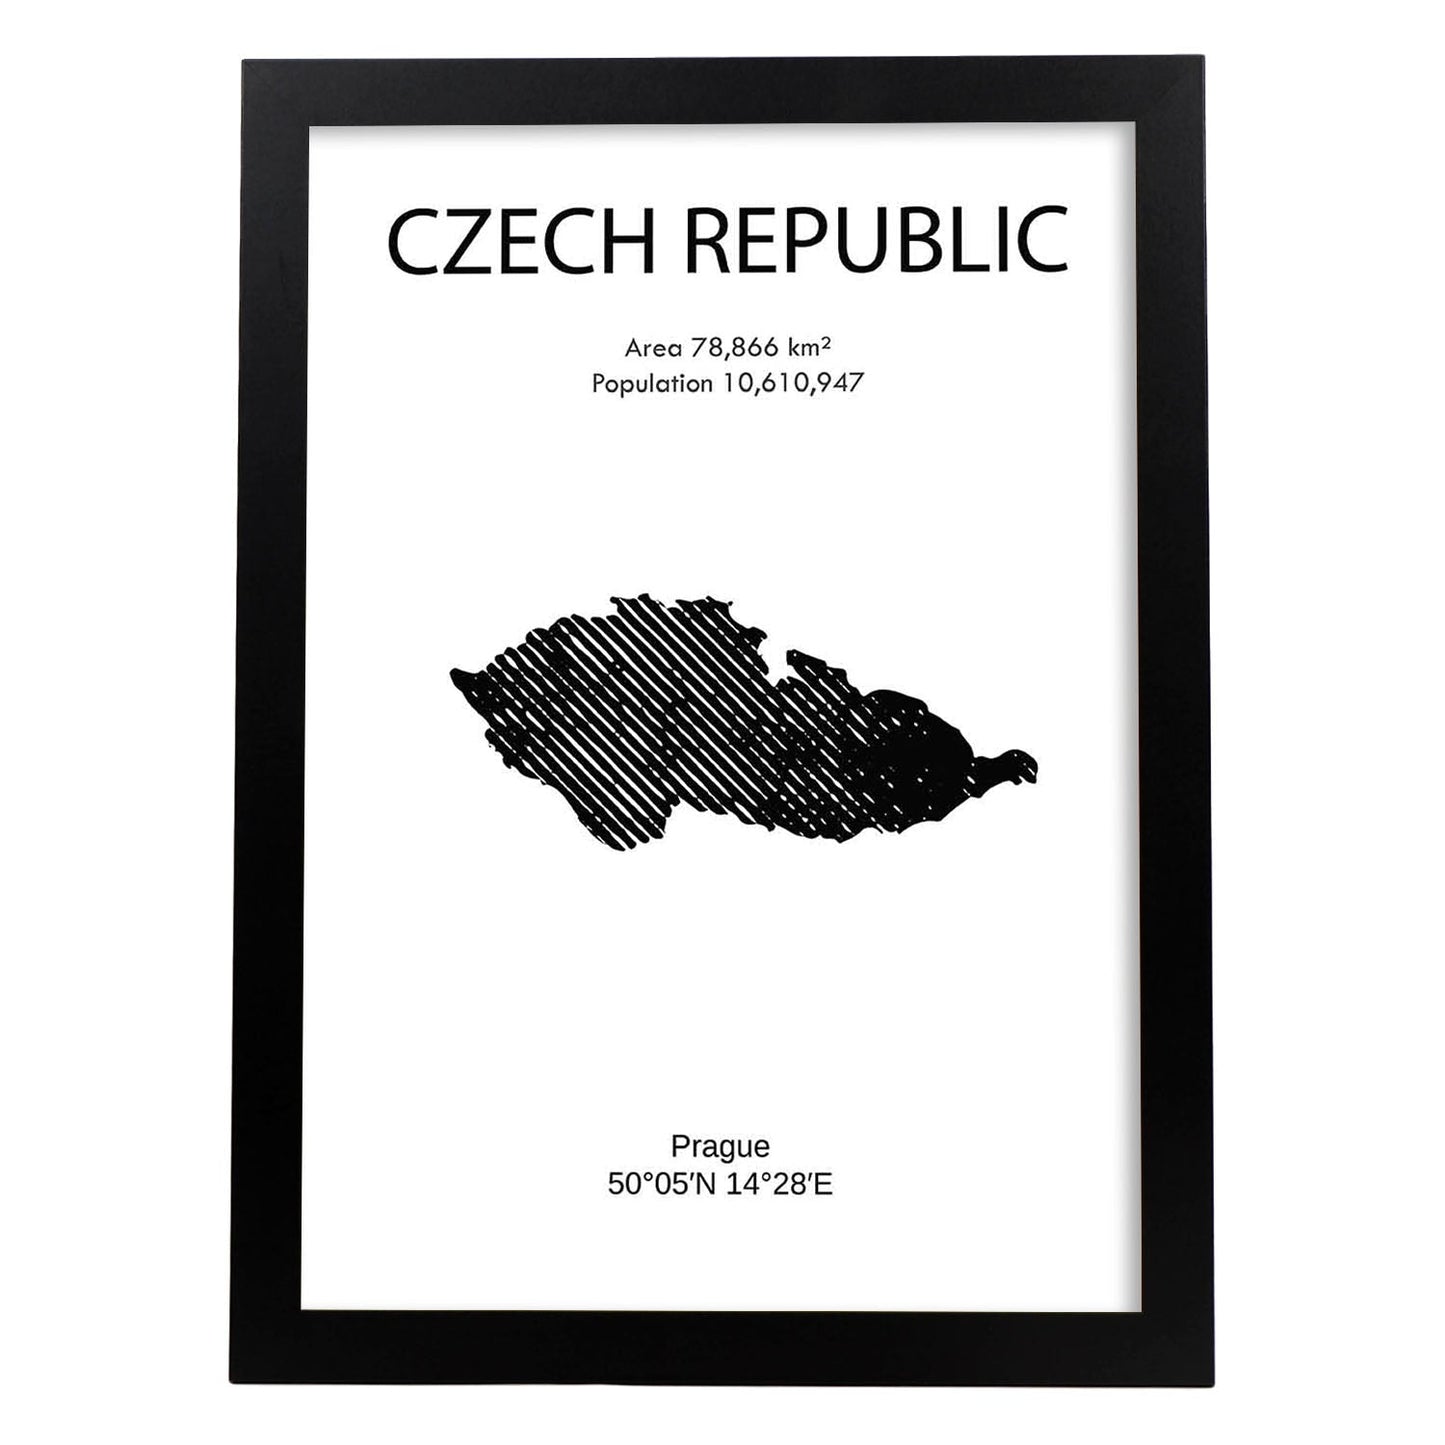 Poster de República Checa. Láminas de paises y continentes del mundo.-Artwork-Nacnic-A3-Marco Negro-Nacnic Estudio SL